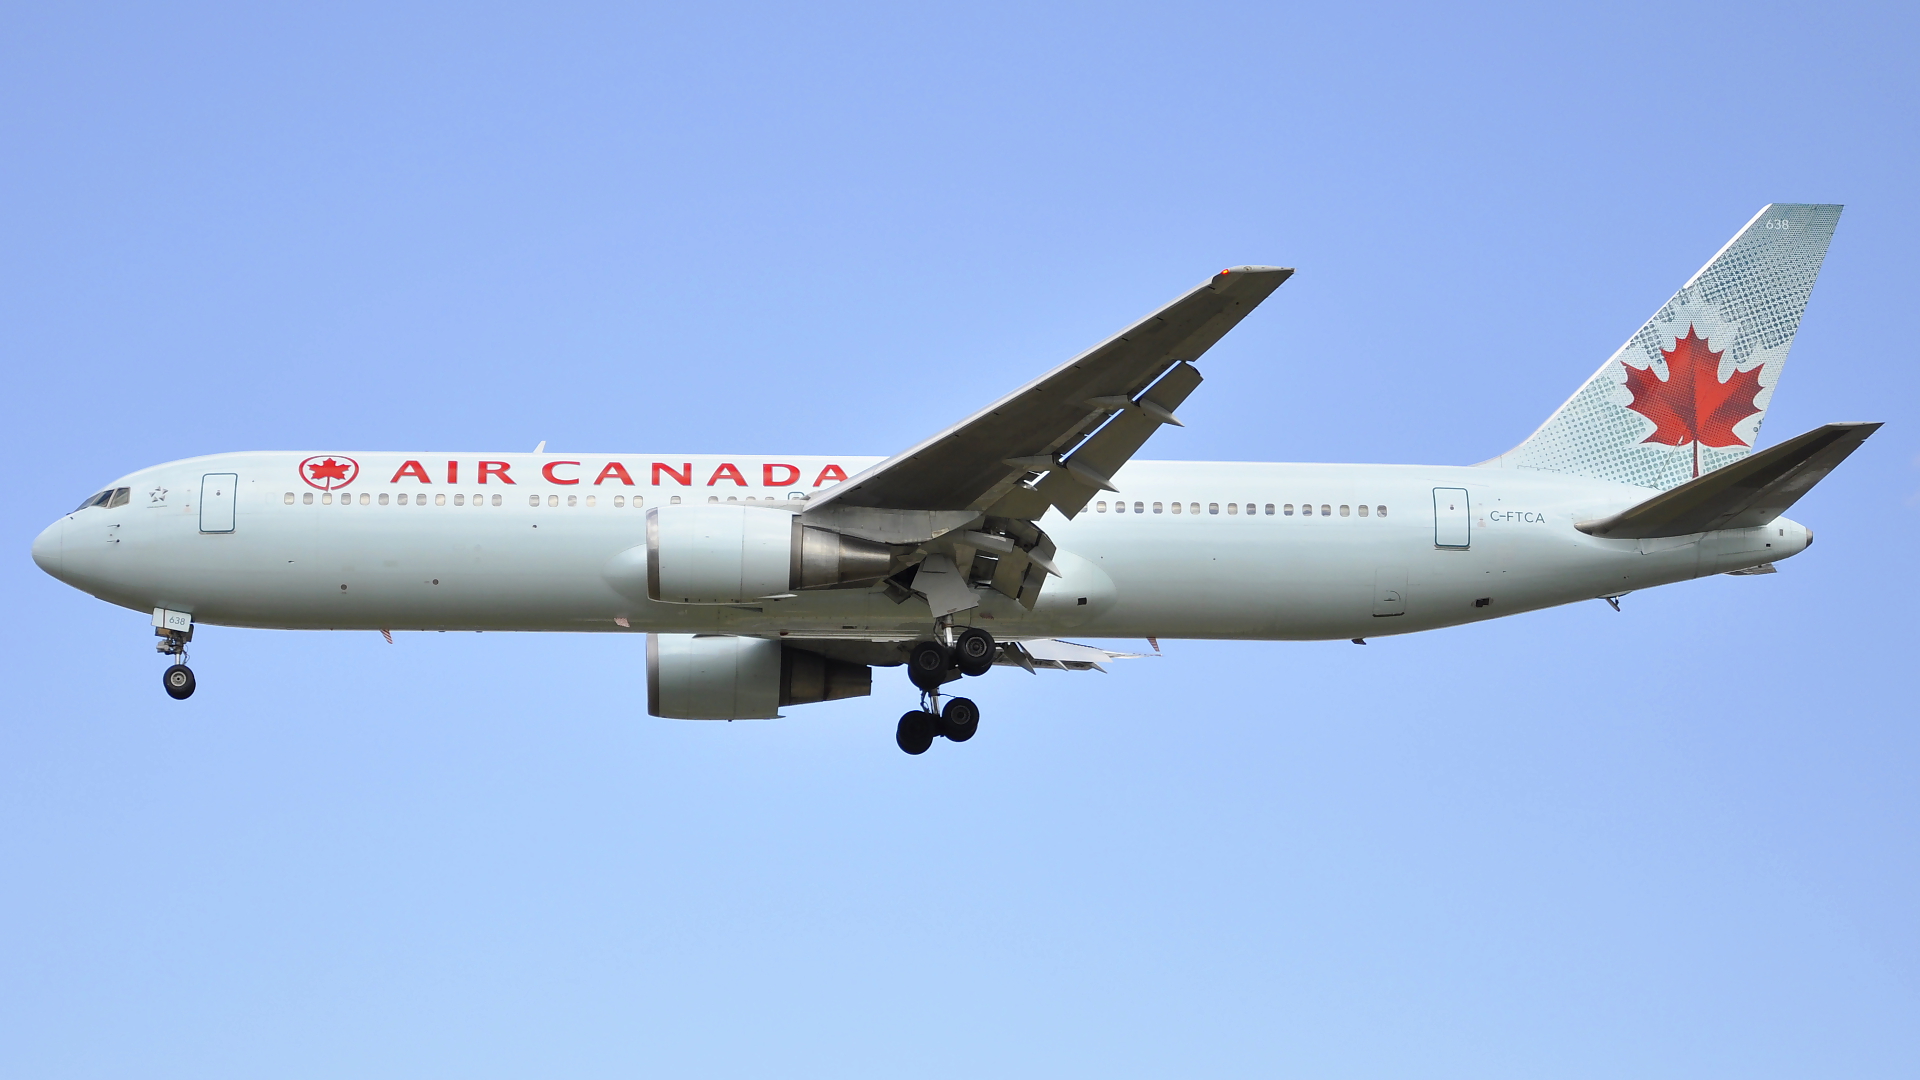 C-FTCA ✈ Air Canada Boeing 767-375(ER) @ London-Heathrow